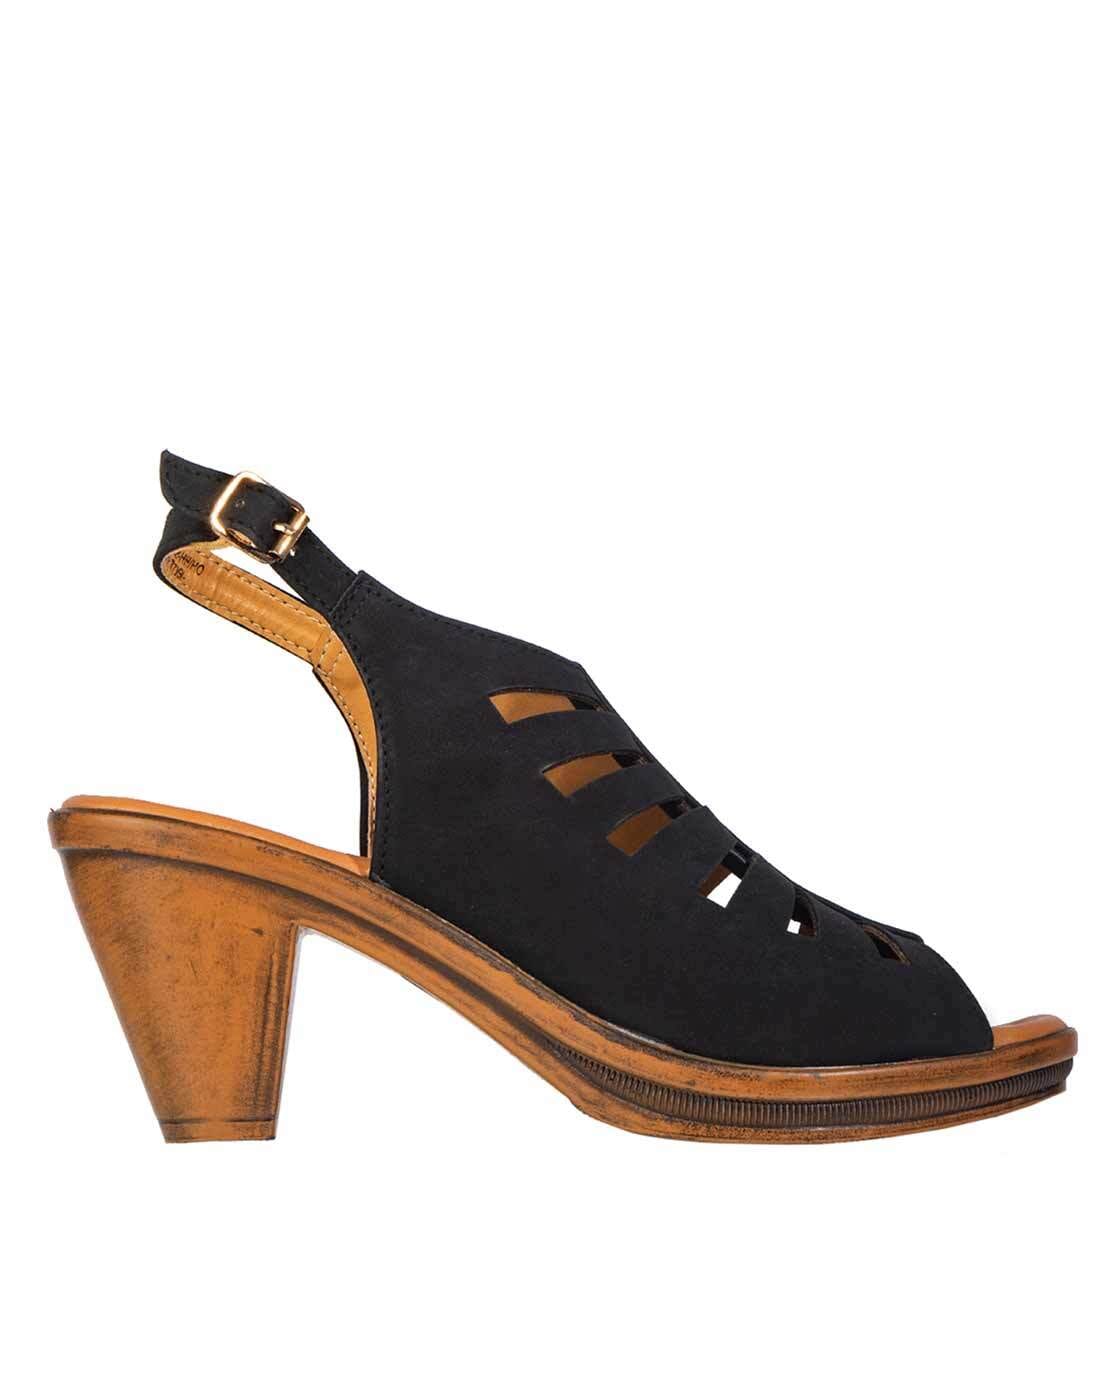 Buy Black Flat Sandals for Women by KHADIMS Online